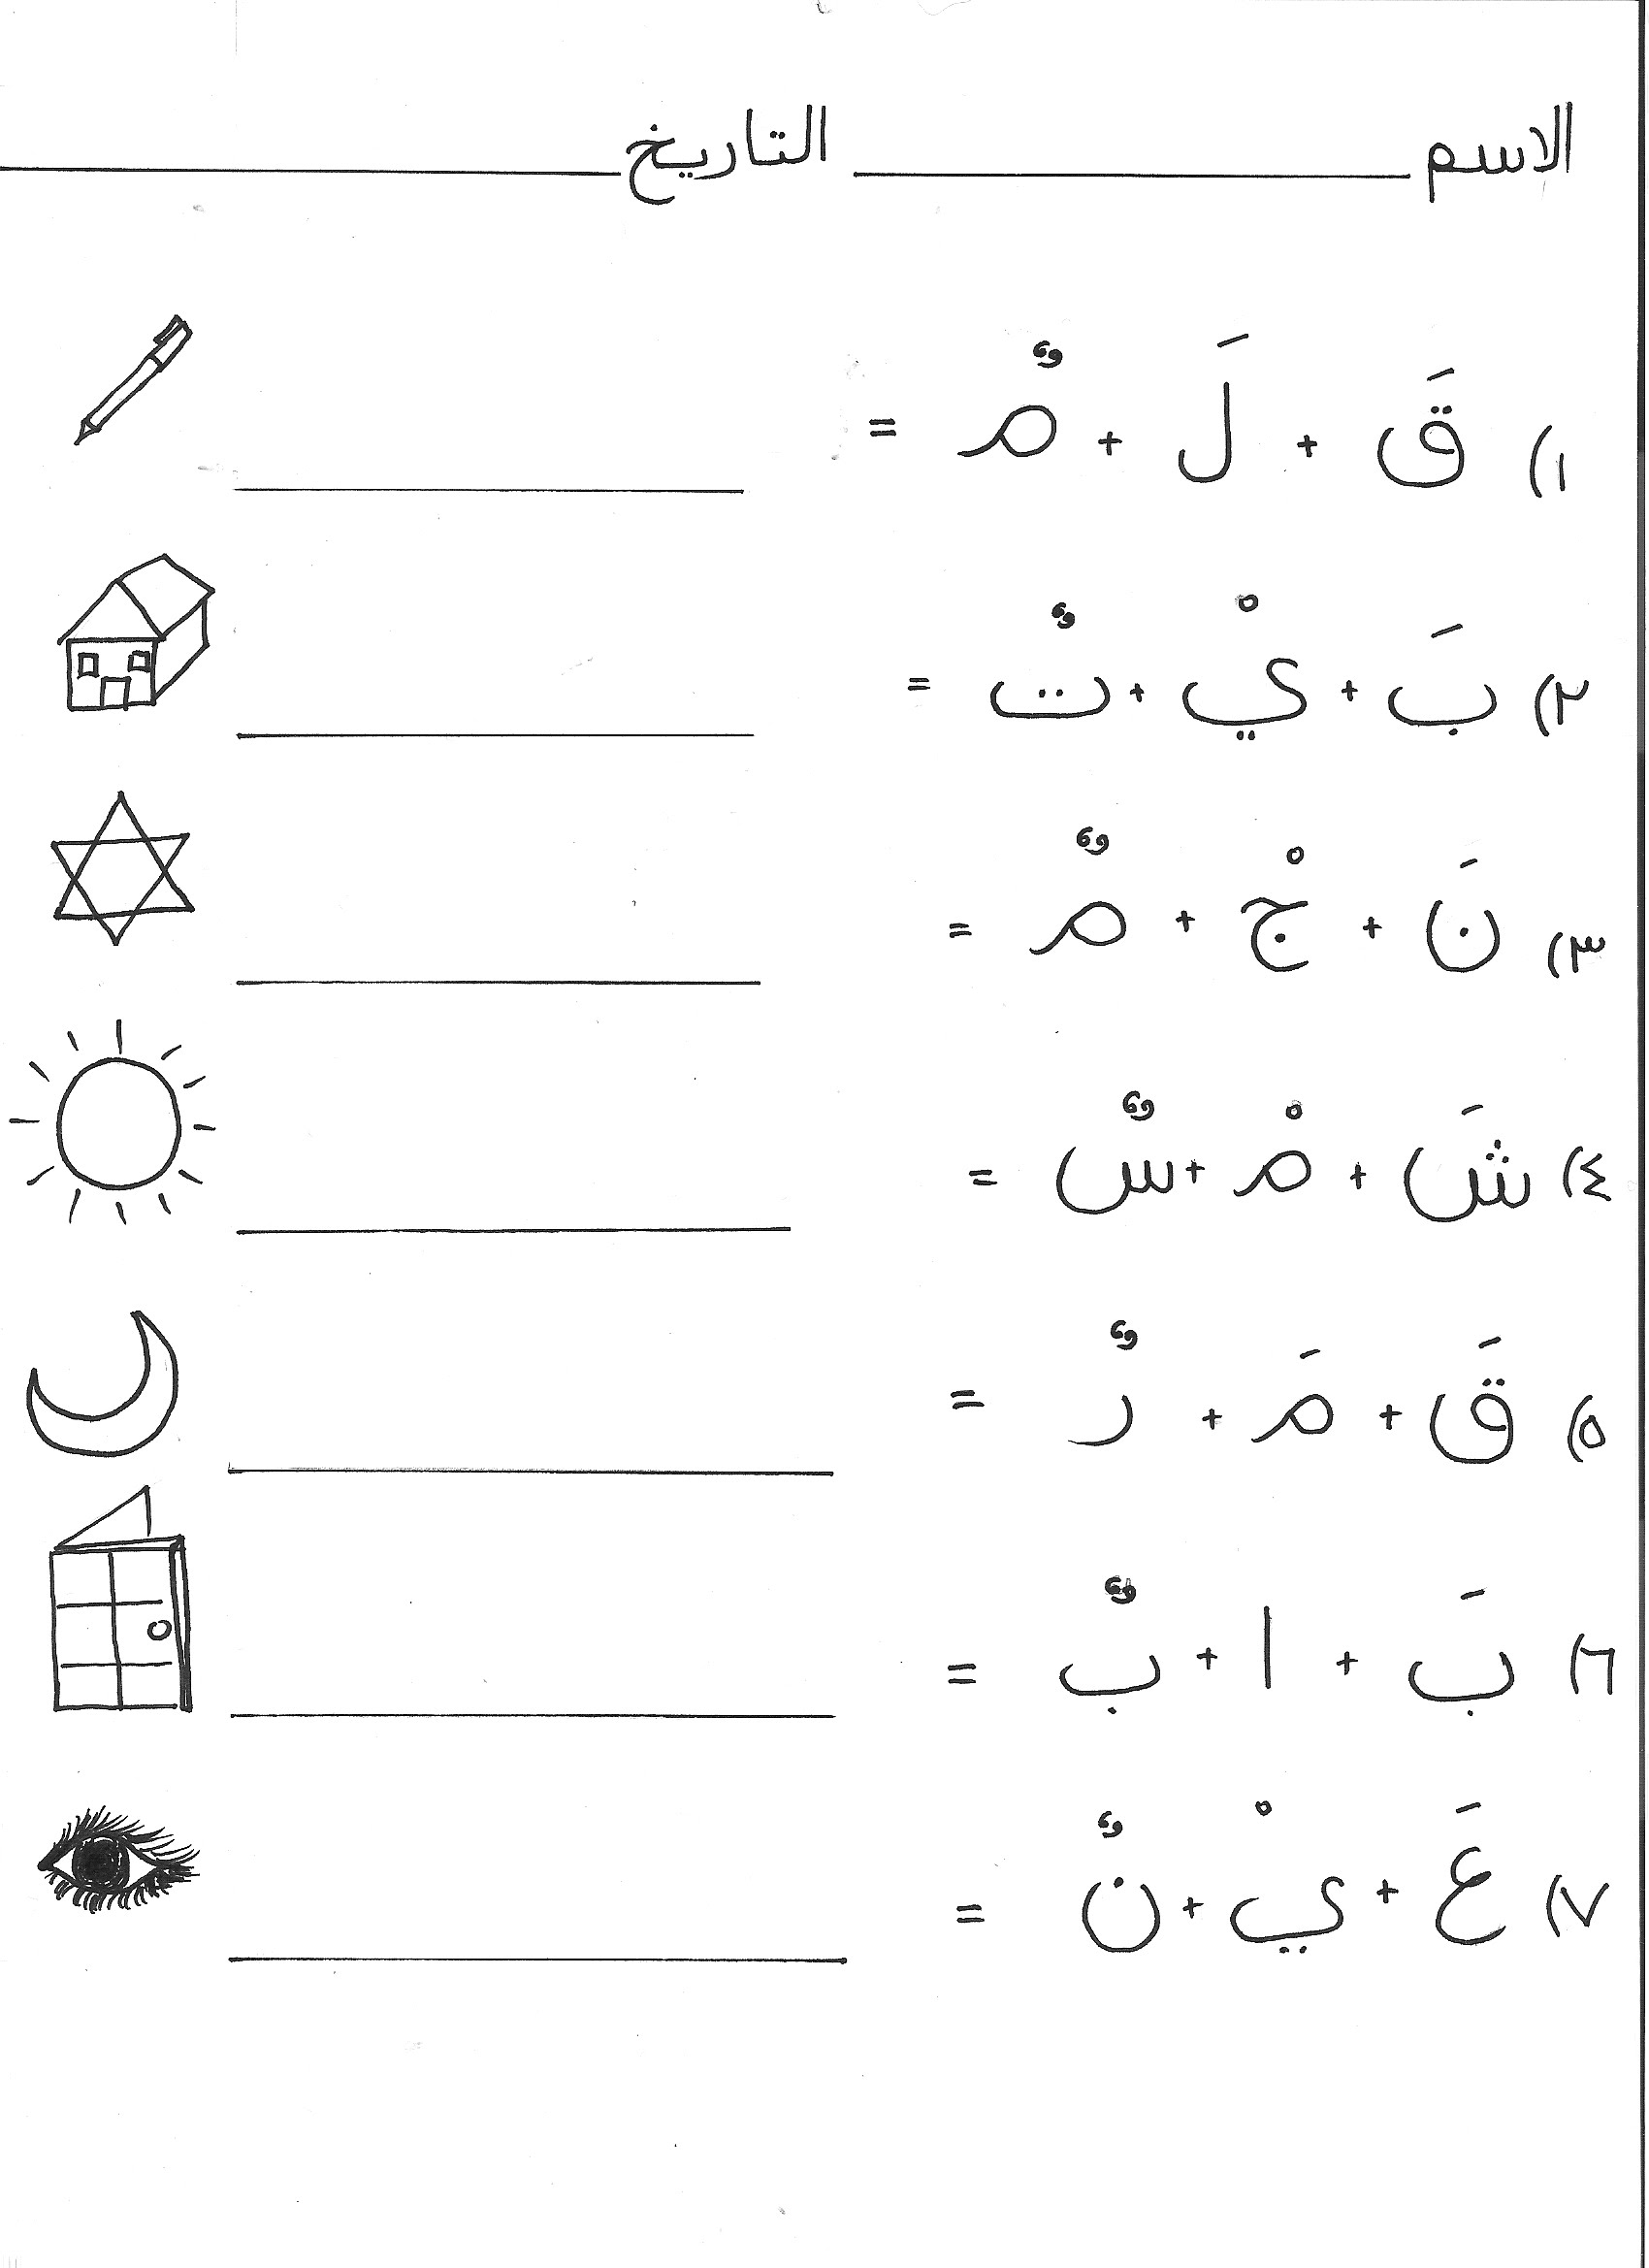 12-useful-phrases-for-english-teachers-in-saudi-arabia-or-any-arabic-speaking-country-learn